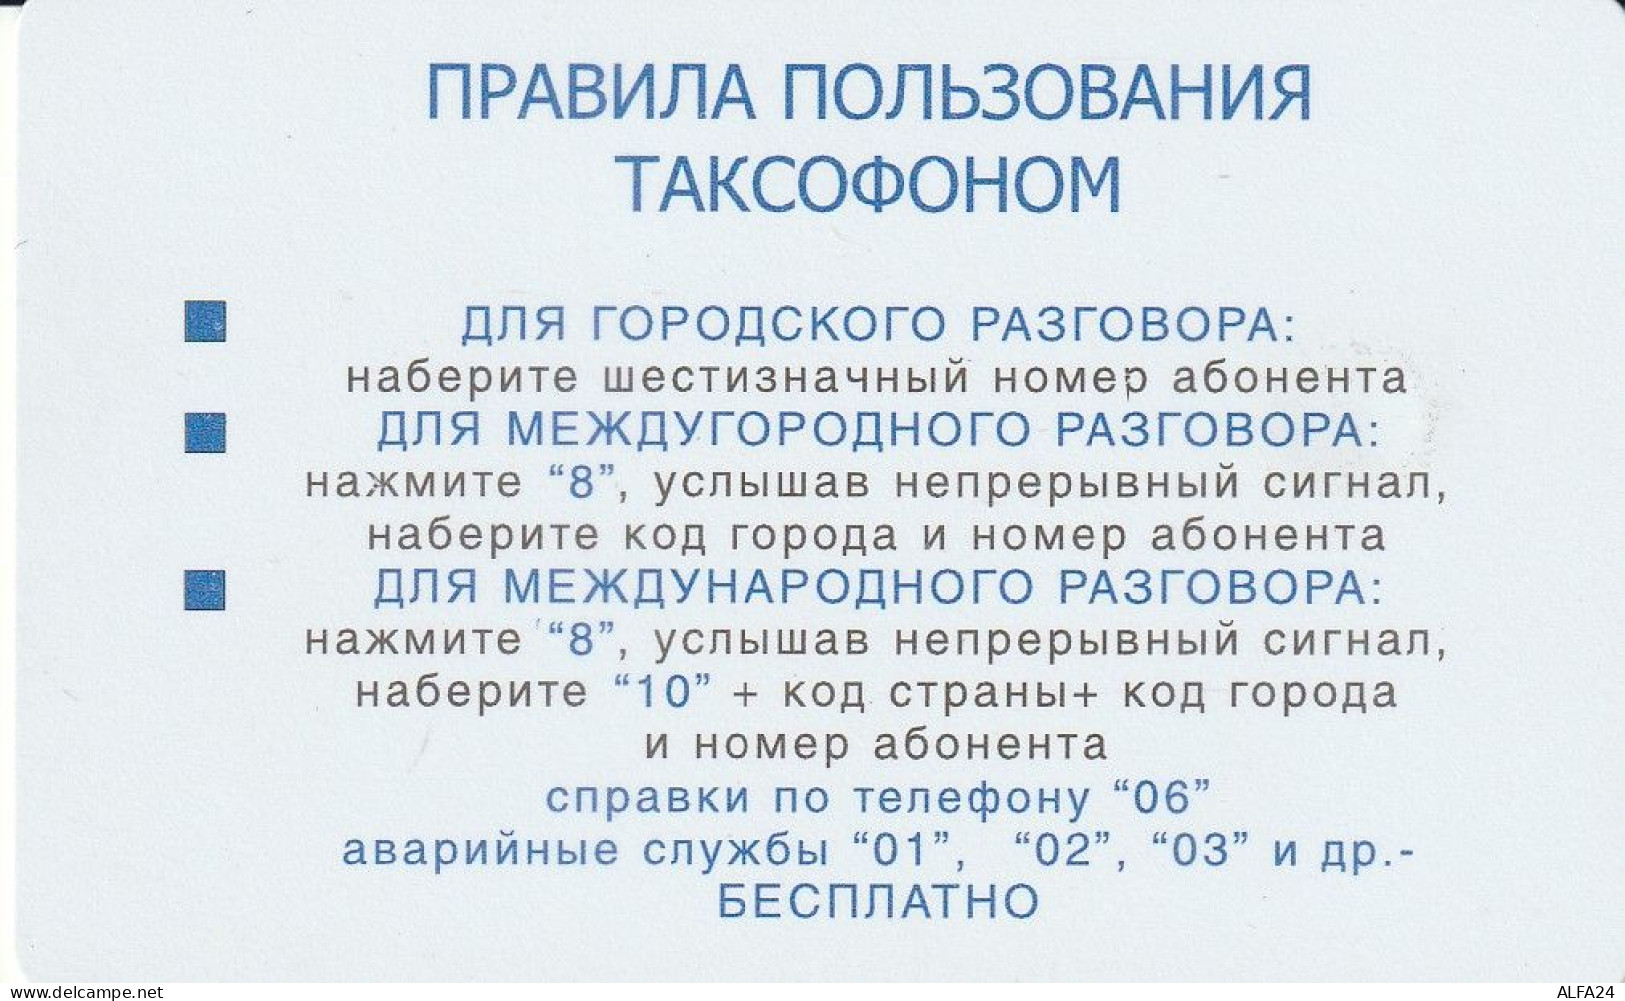 PHONE CARD RUSSIA Samara (E9.9.2 - Rusland